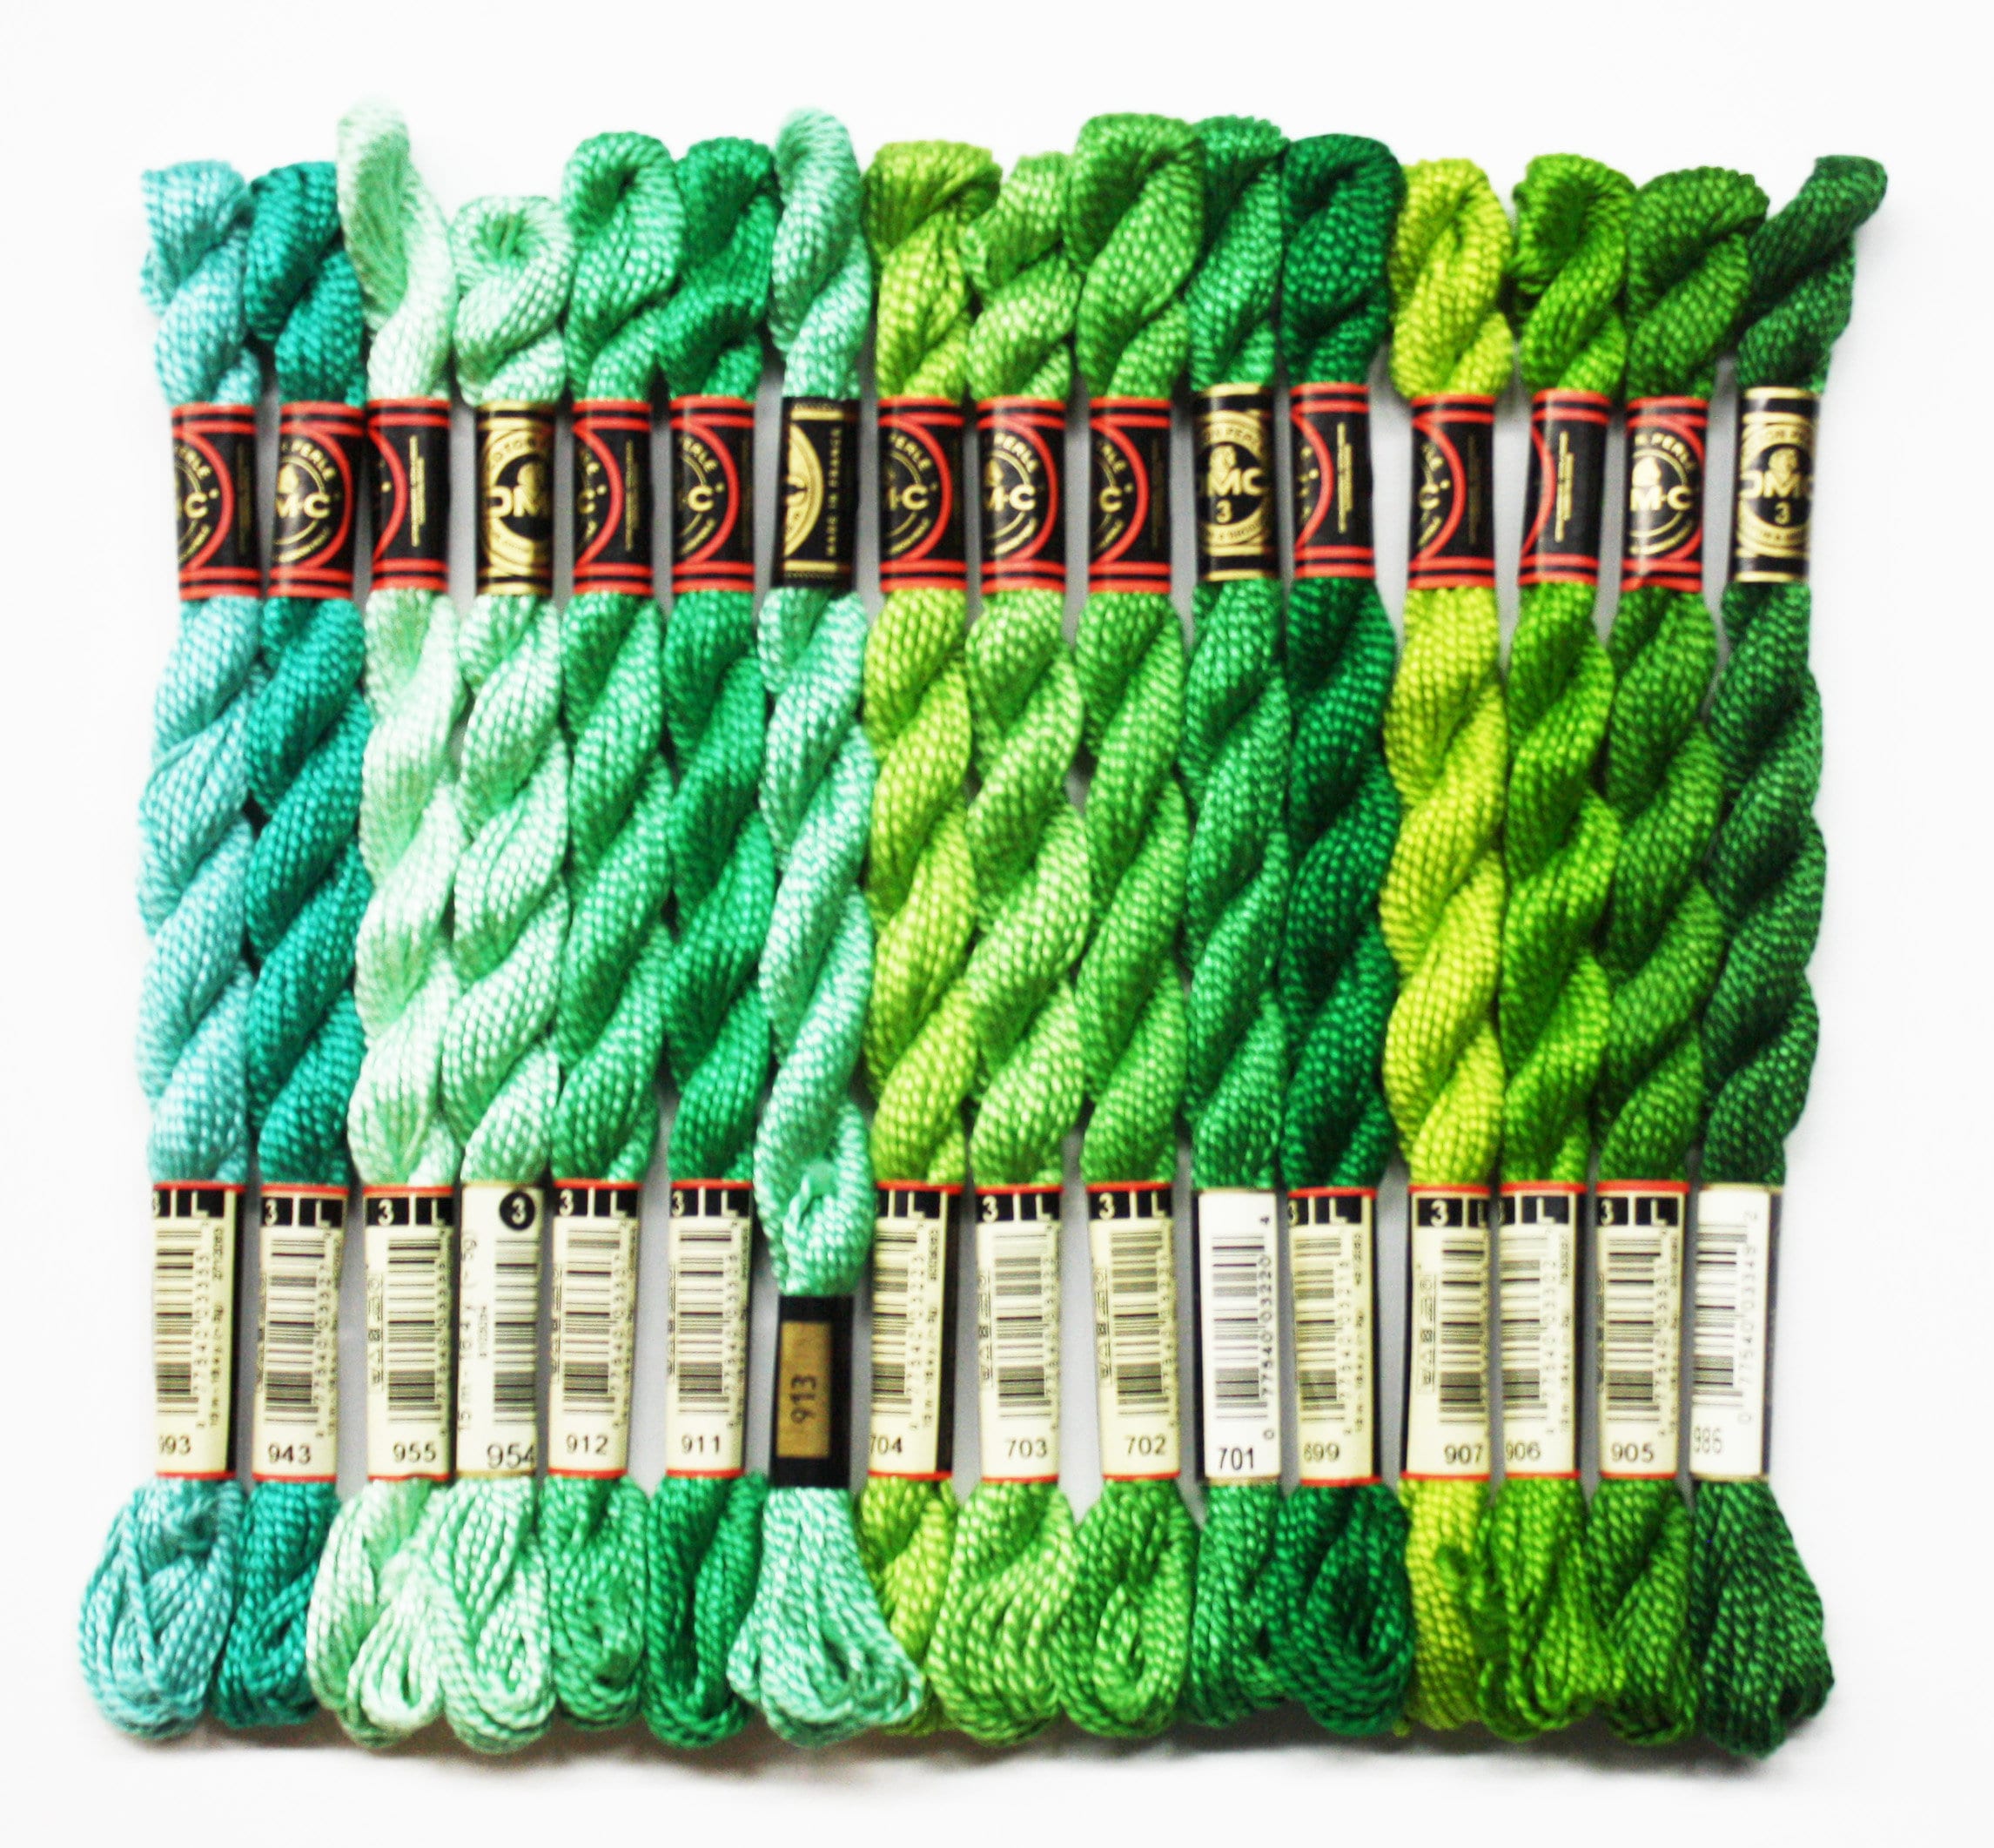 DMC Perle Cotton Size 3, Perle Cotton Thread, Needlepoint Threads,  Cross-stitch, Embroidery, Cotton Threads, Needlework Yarns, Cotton Perle 